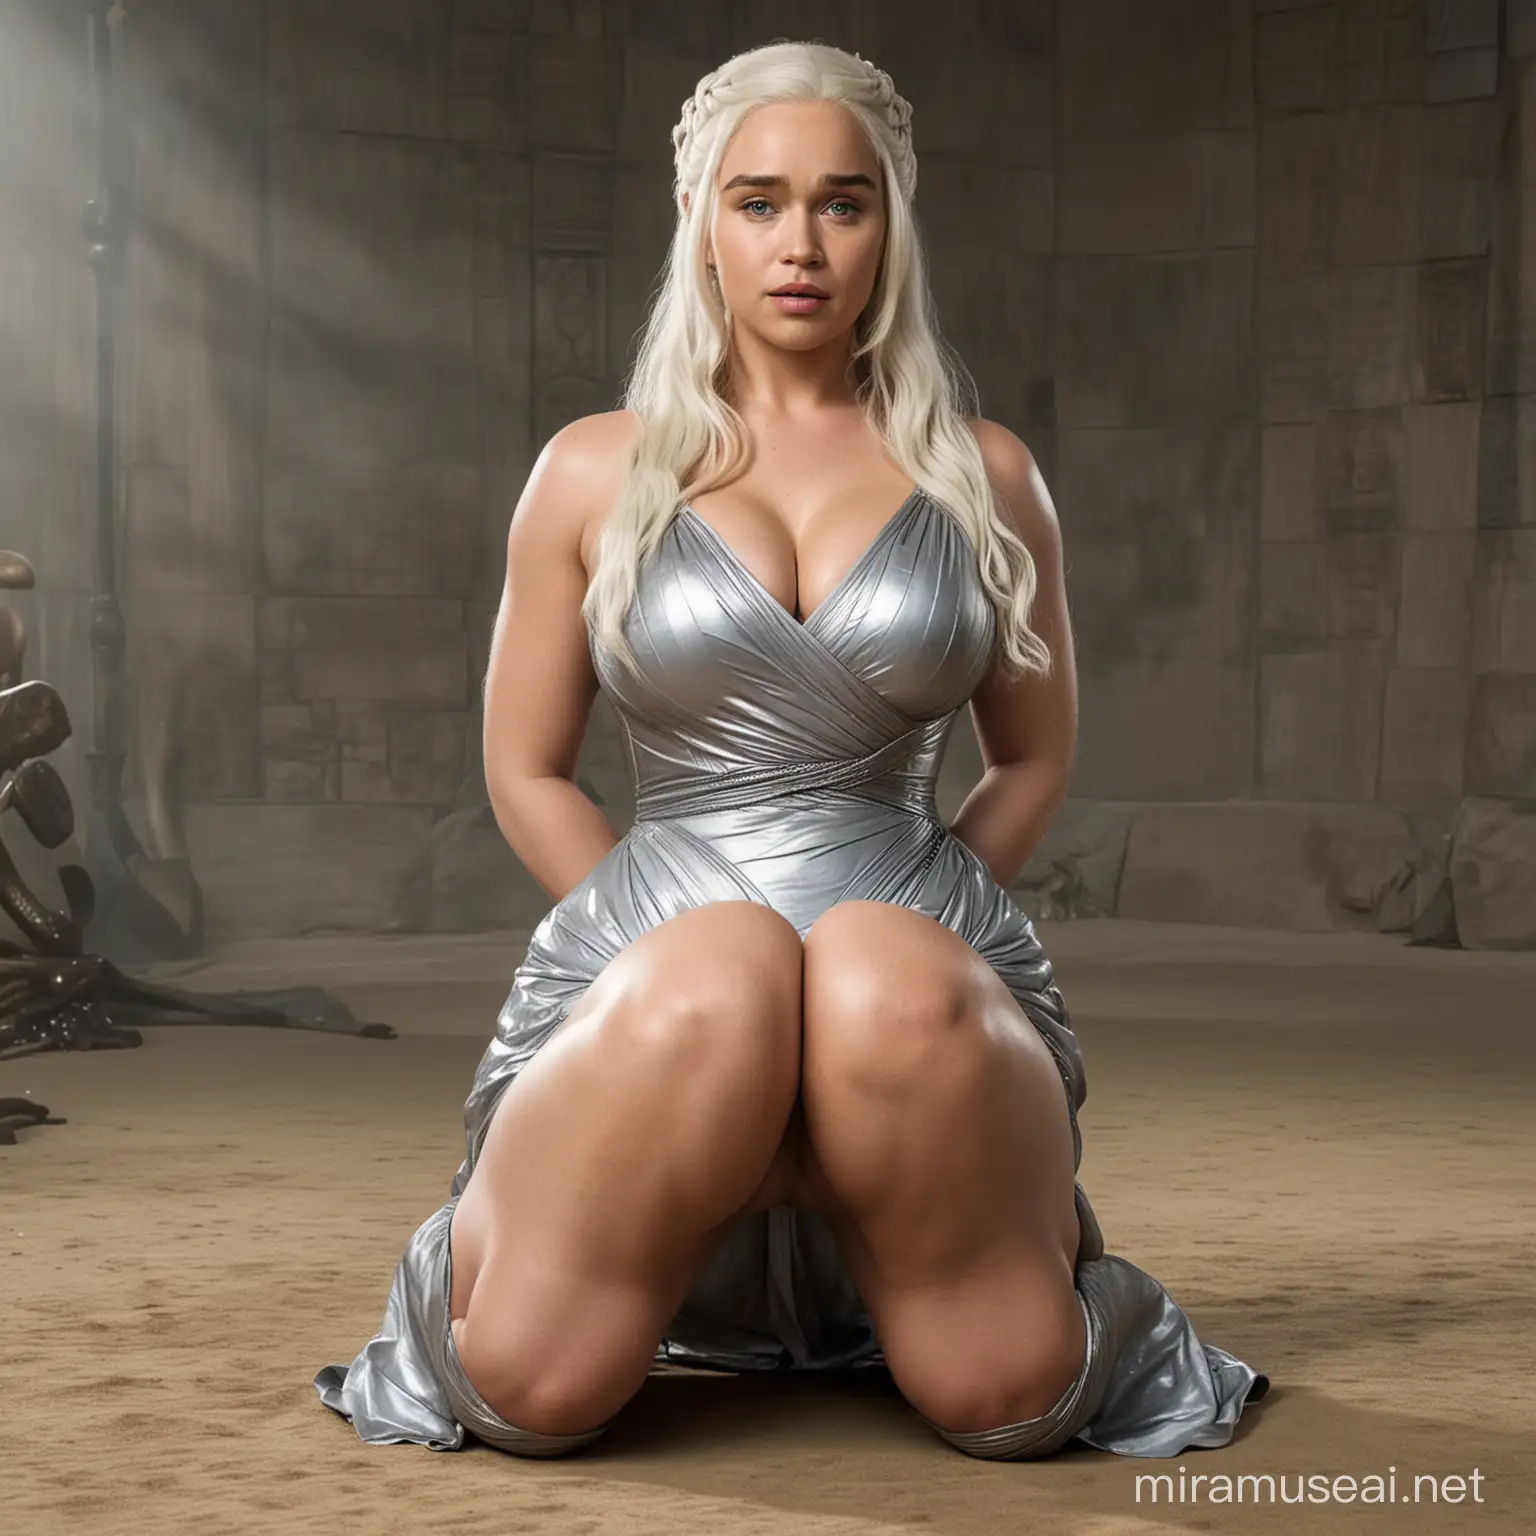 Daenerys Targaryen Squatting in Tight Silver Dress Game of Thrones Cosplay